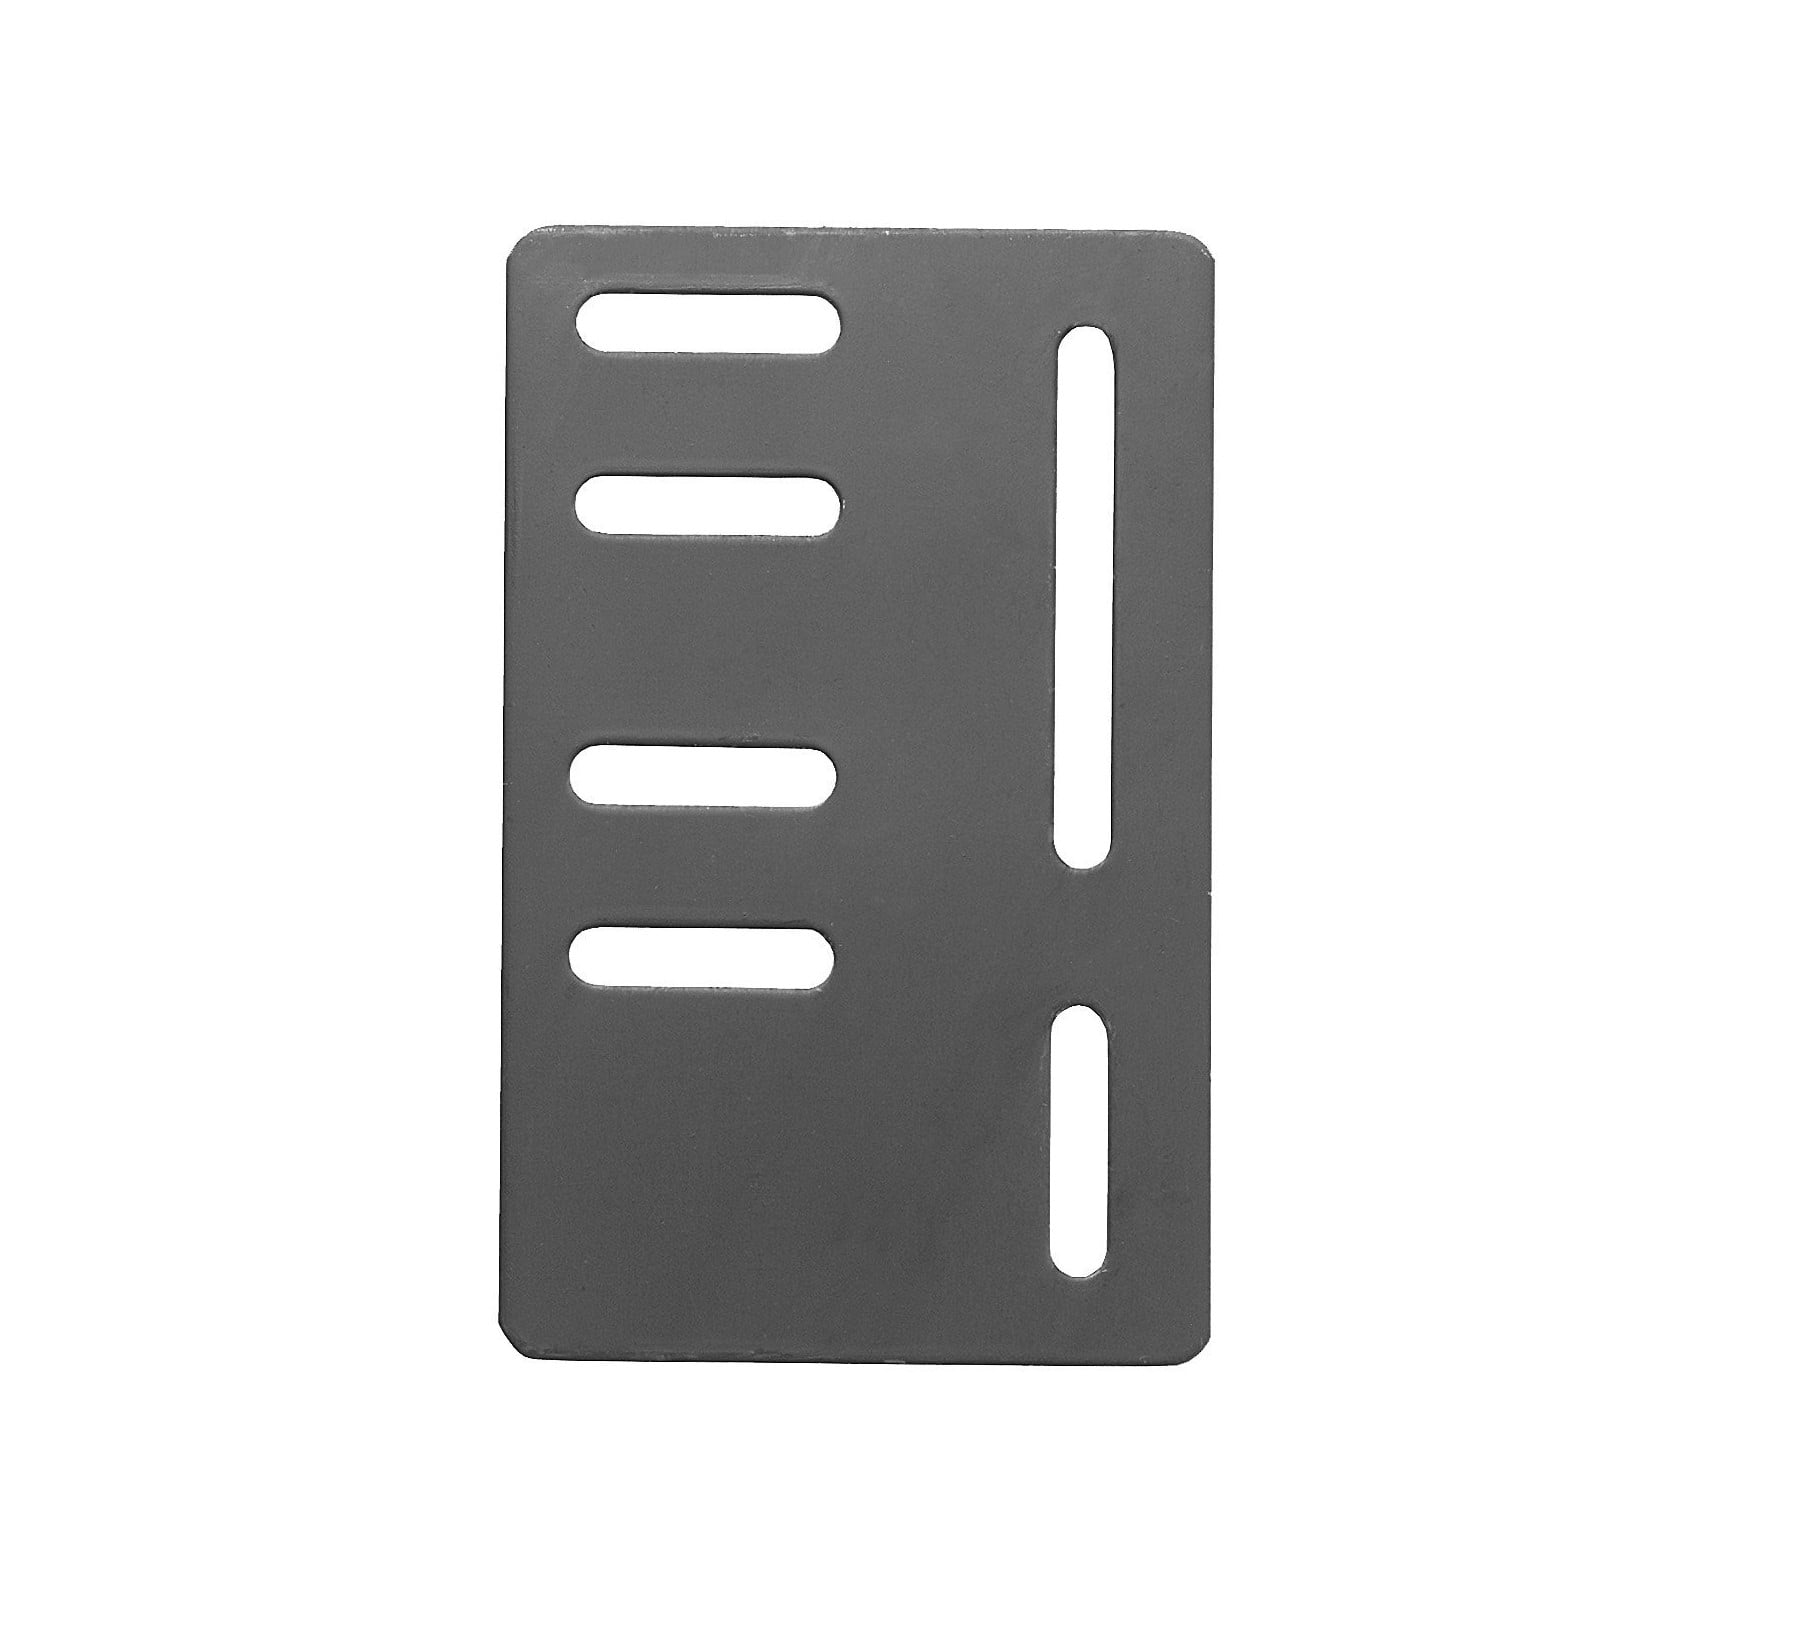 Bed Frame Headboard Bracket Modification Modi-Plate Set of 2 Plates